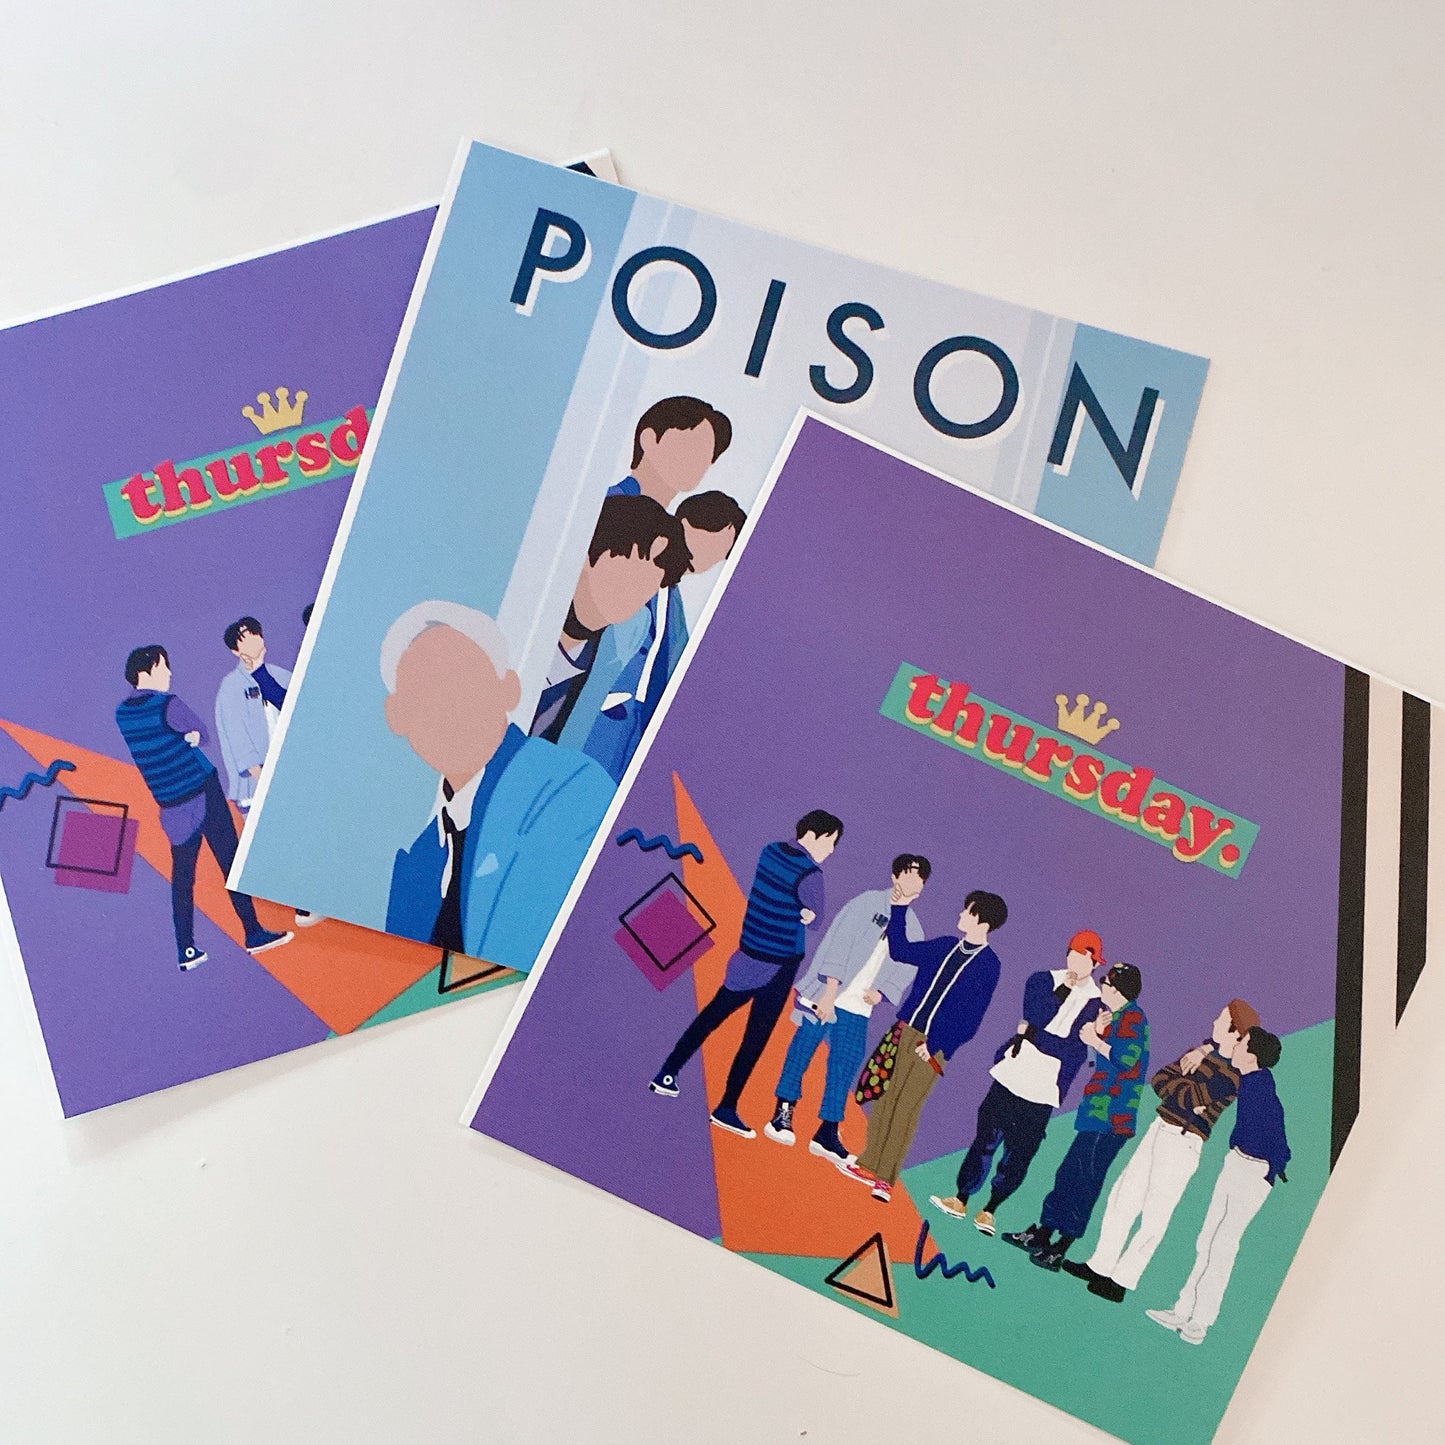 GOT7 Fan Art Matte Square Print - Poison and Thursday 4” by 4”